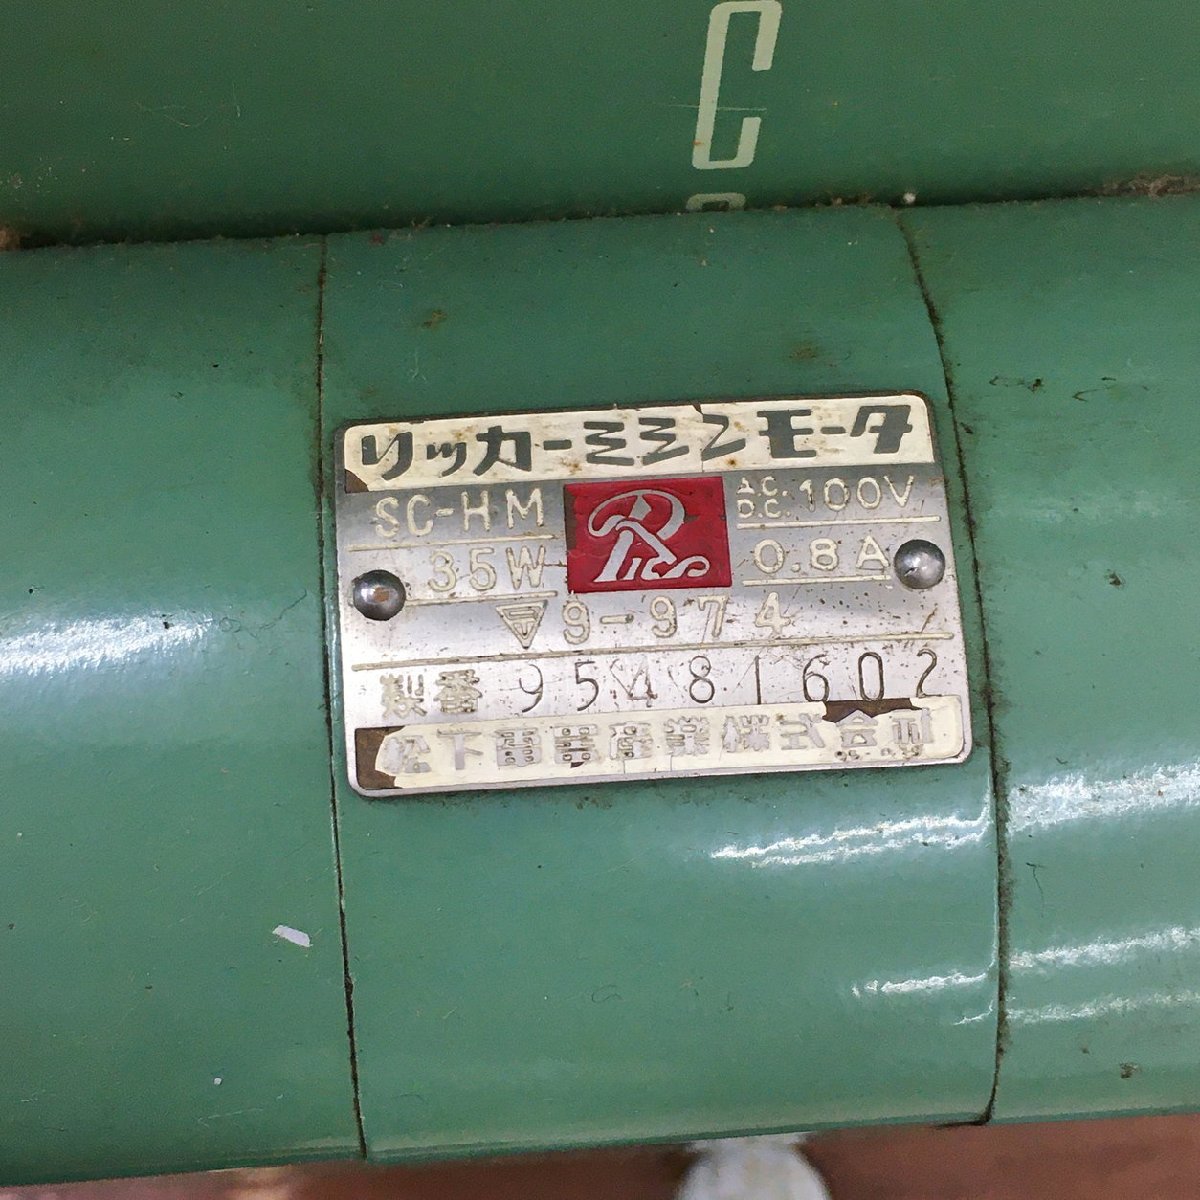  Matsushita электро- контейнер li машина швейная машина SC-HM 35W Junk 2311LR010